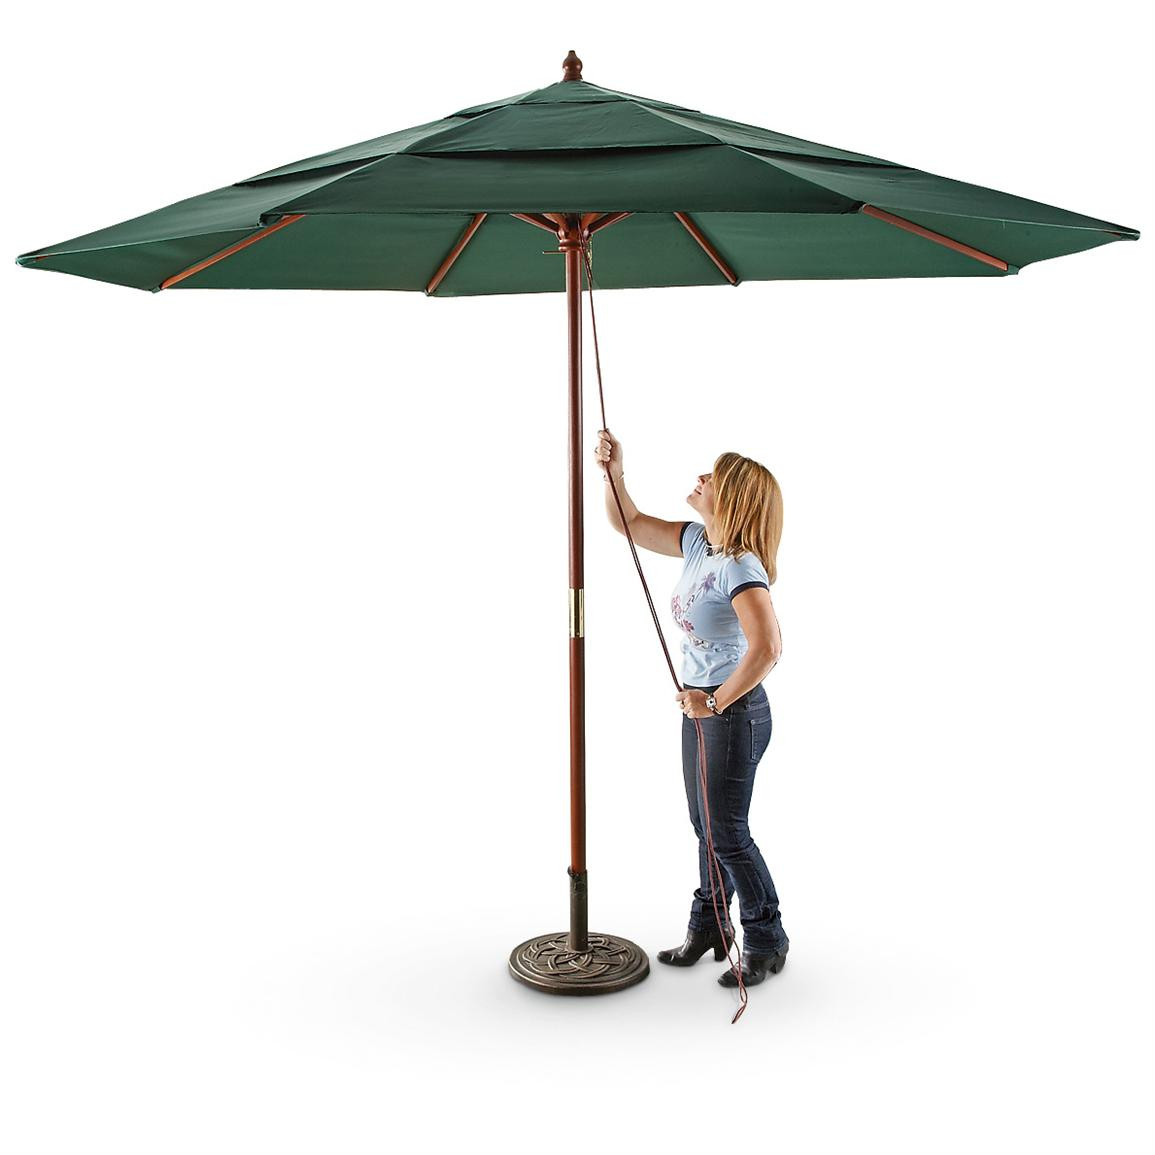 Best ideas about 11 Ft Patio Umbrella
. Save or Pin CASTLECREEK™ 3 Tier 11 Umbrella Patio Now.